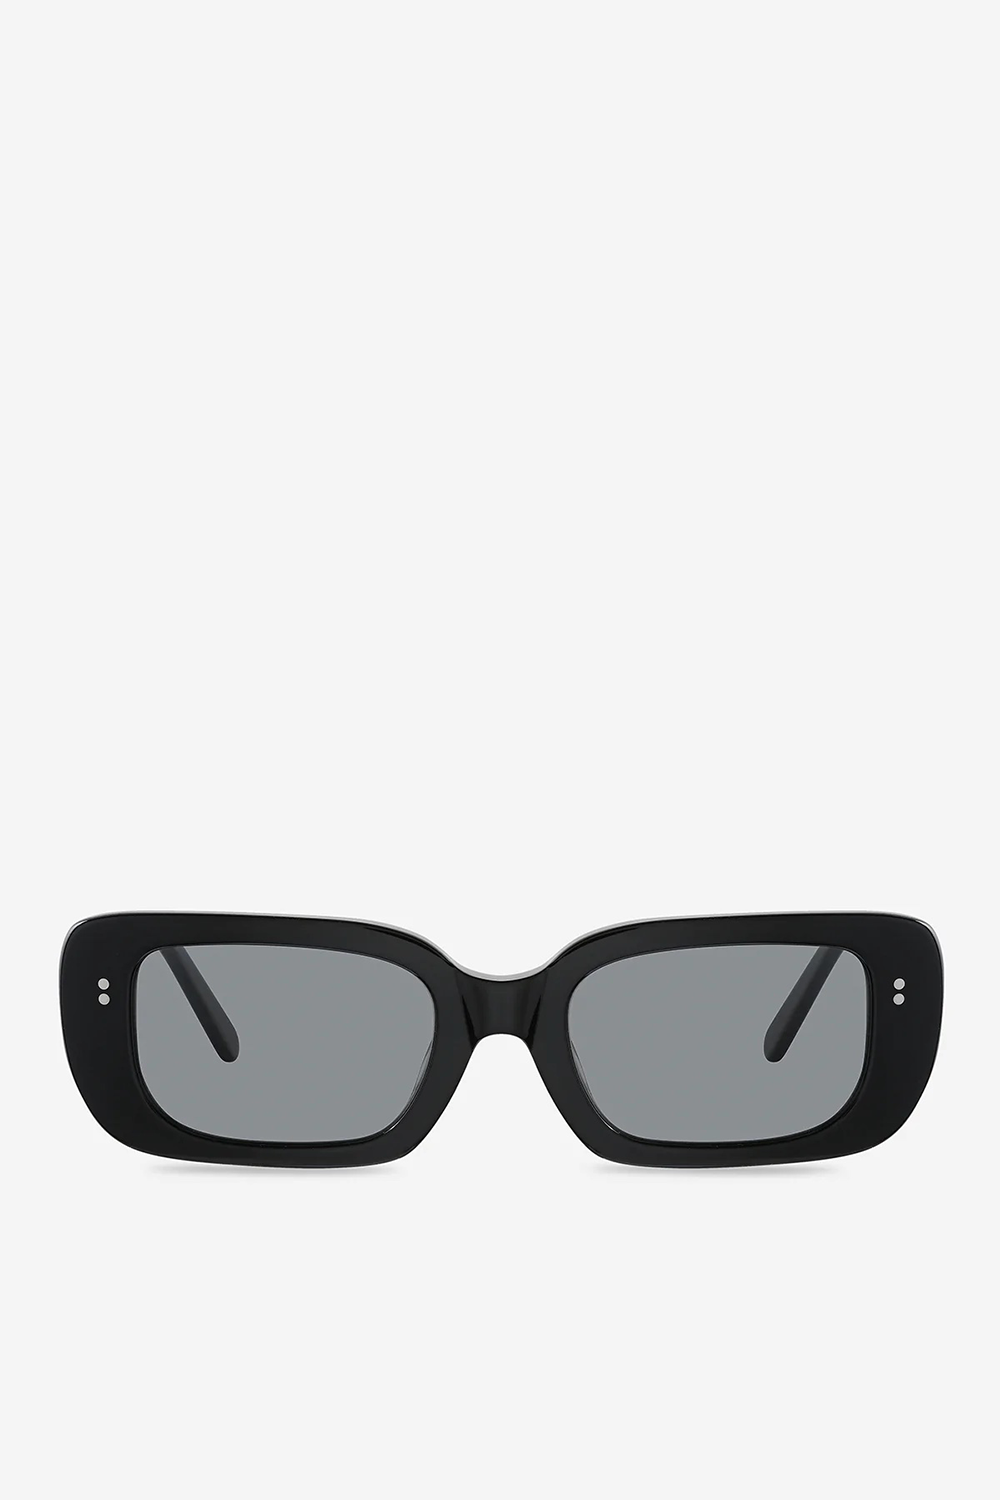 Solitary Sunglasses in Black